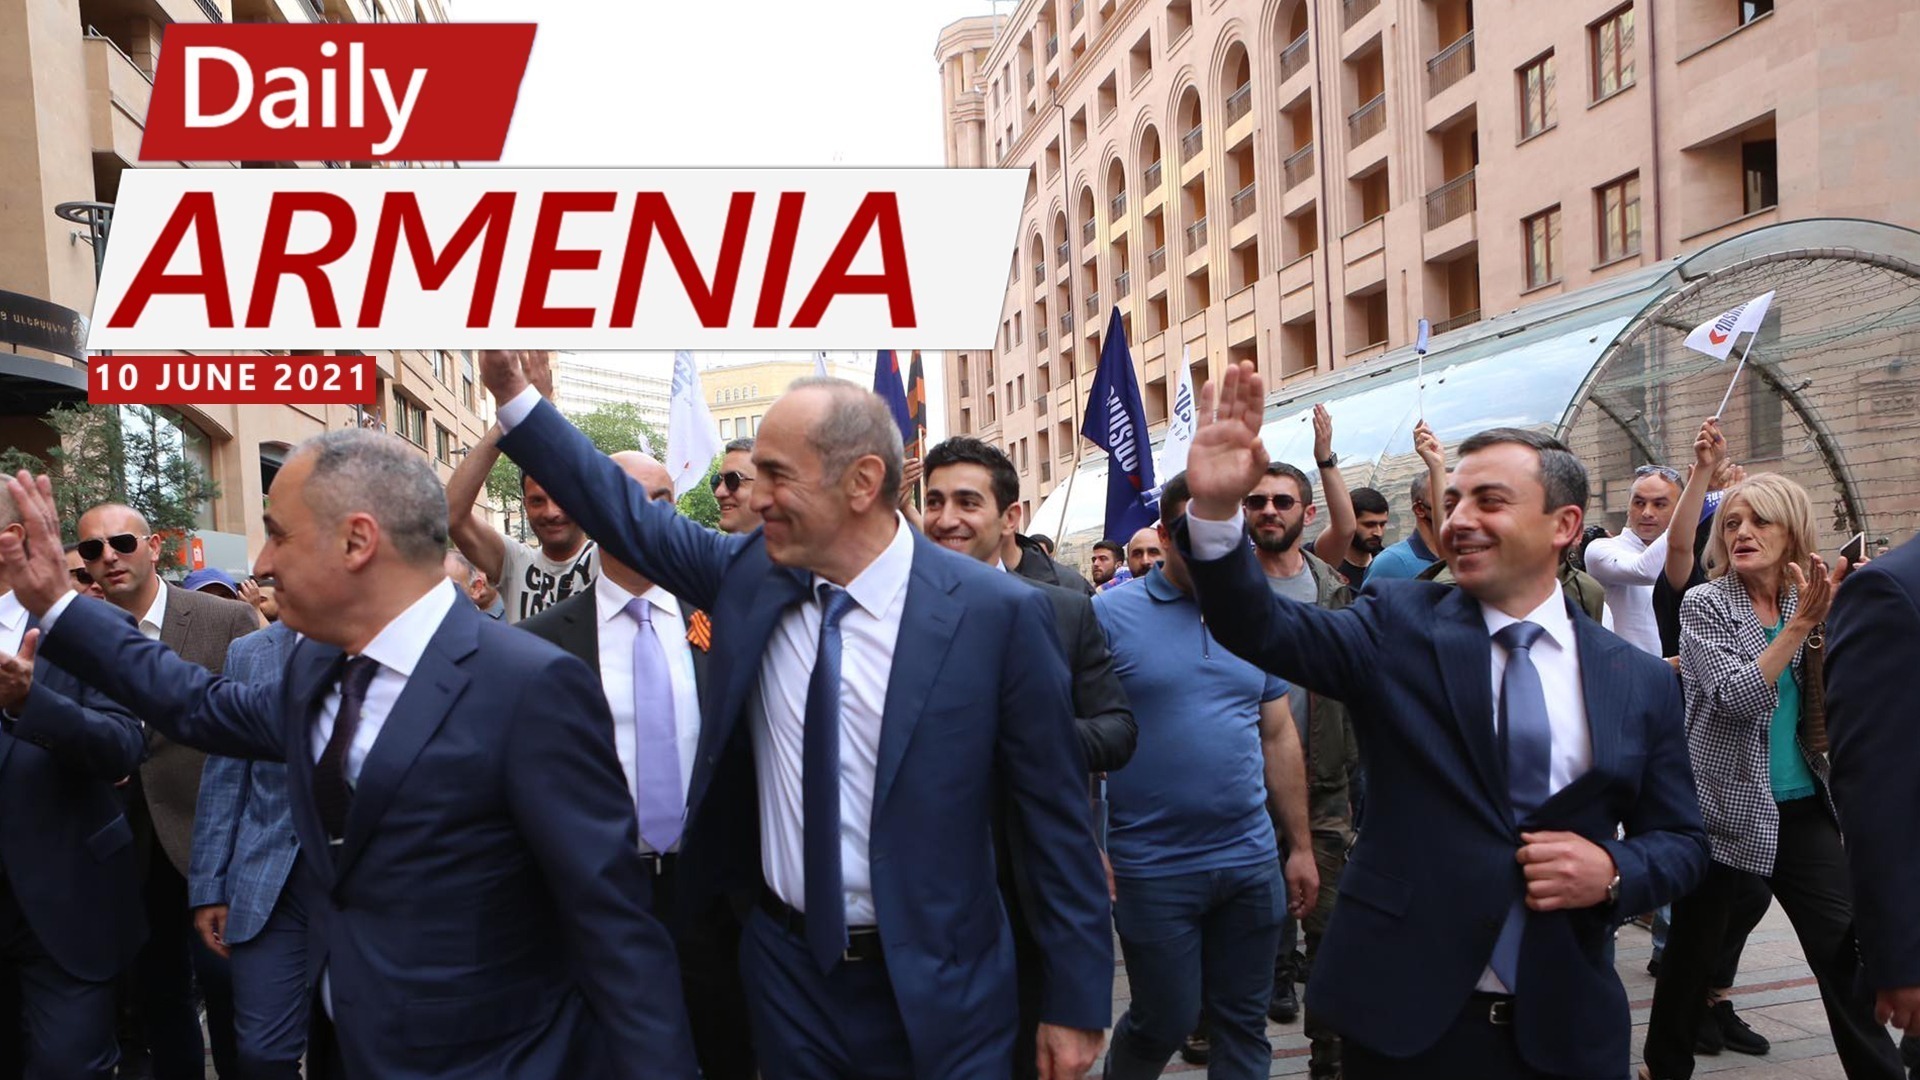 Freedom House Calls On Armenian Politicians to Avoid Violent Rhetoric